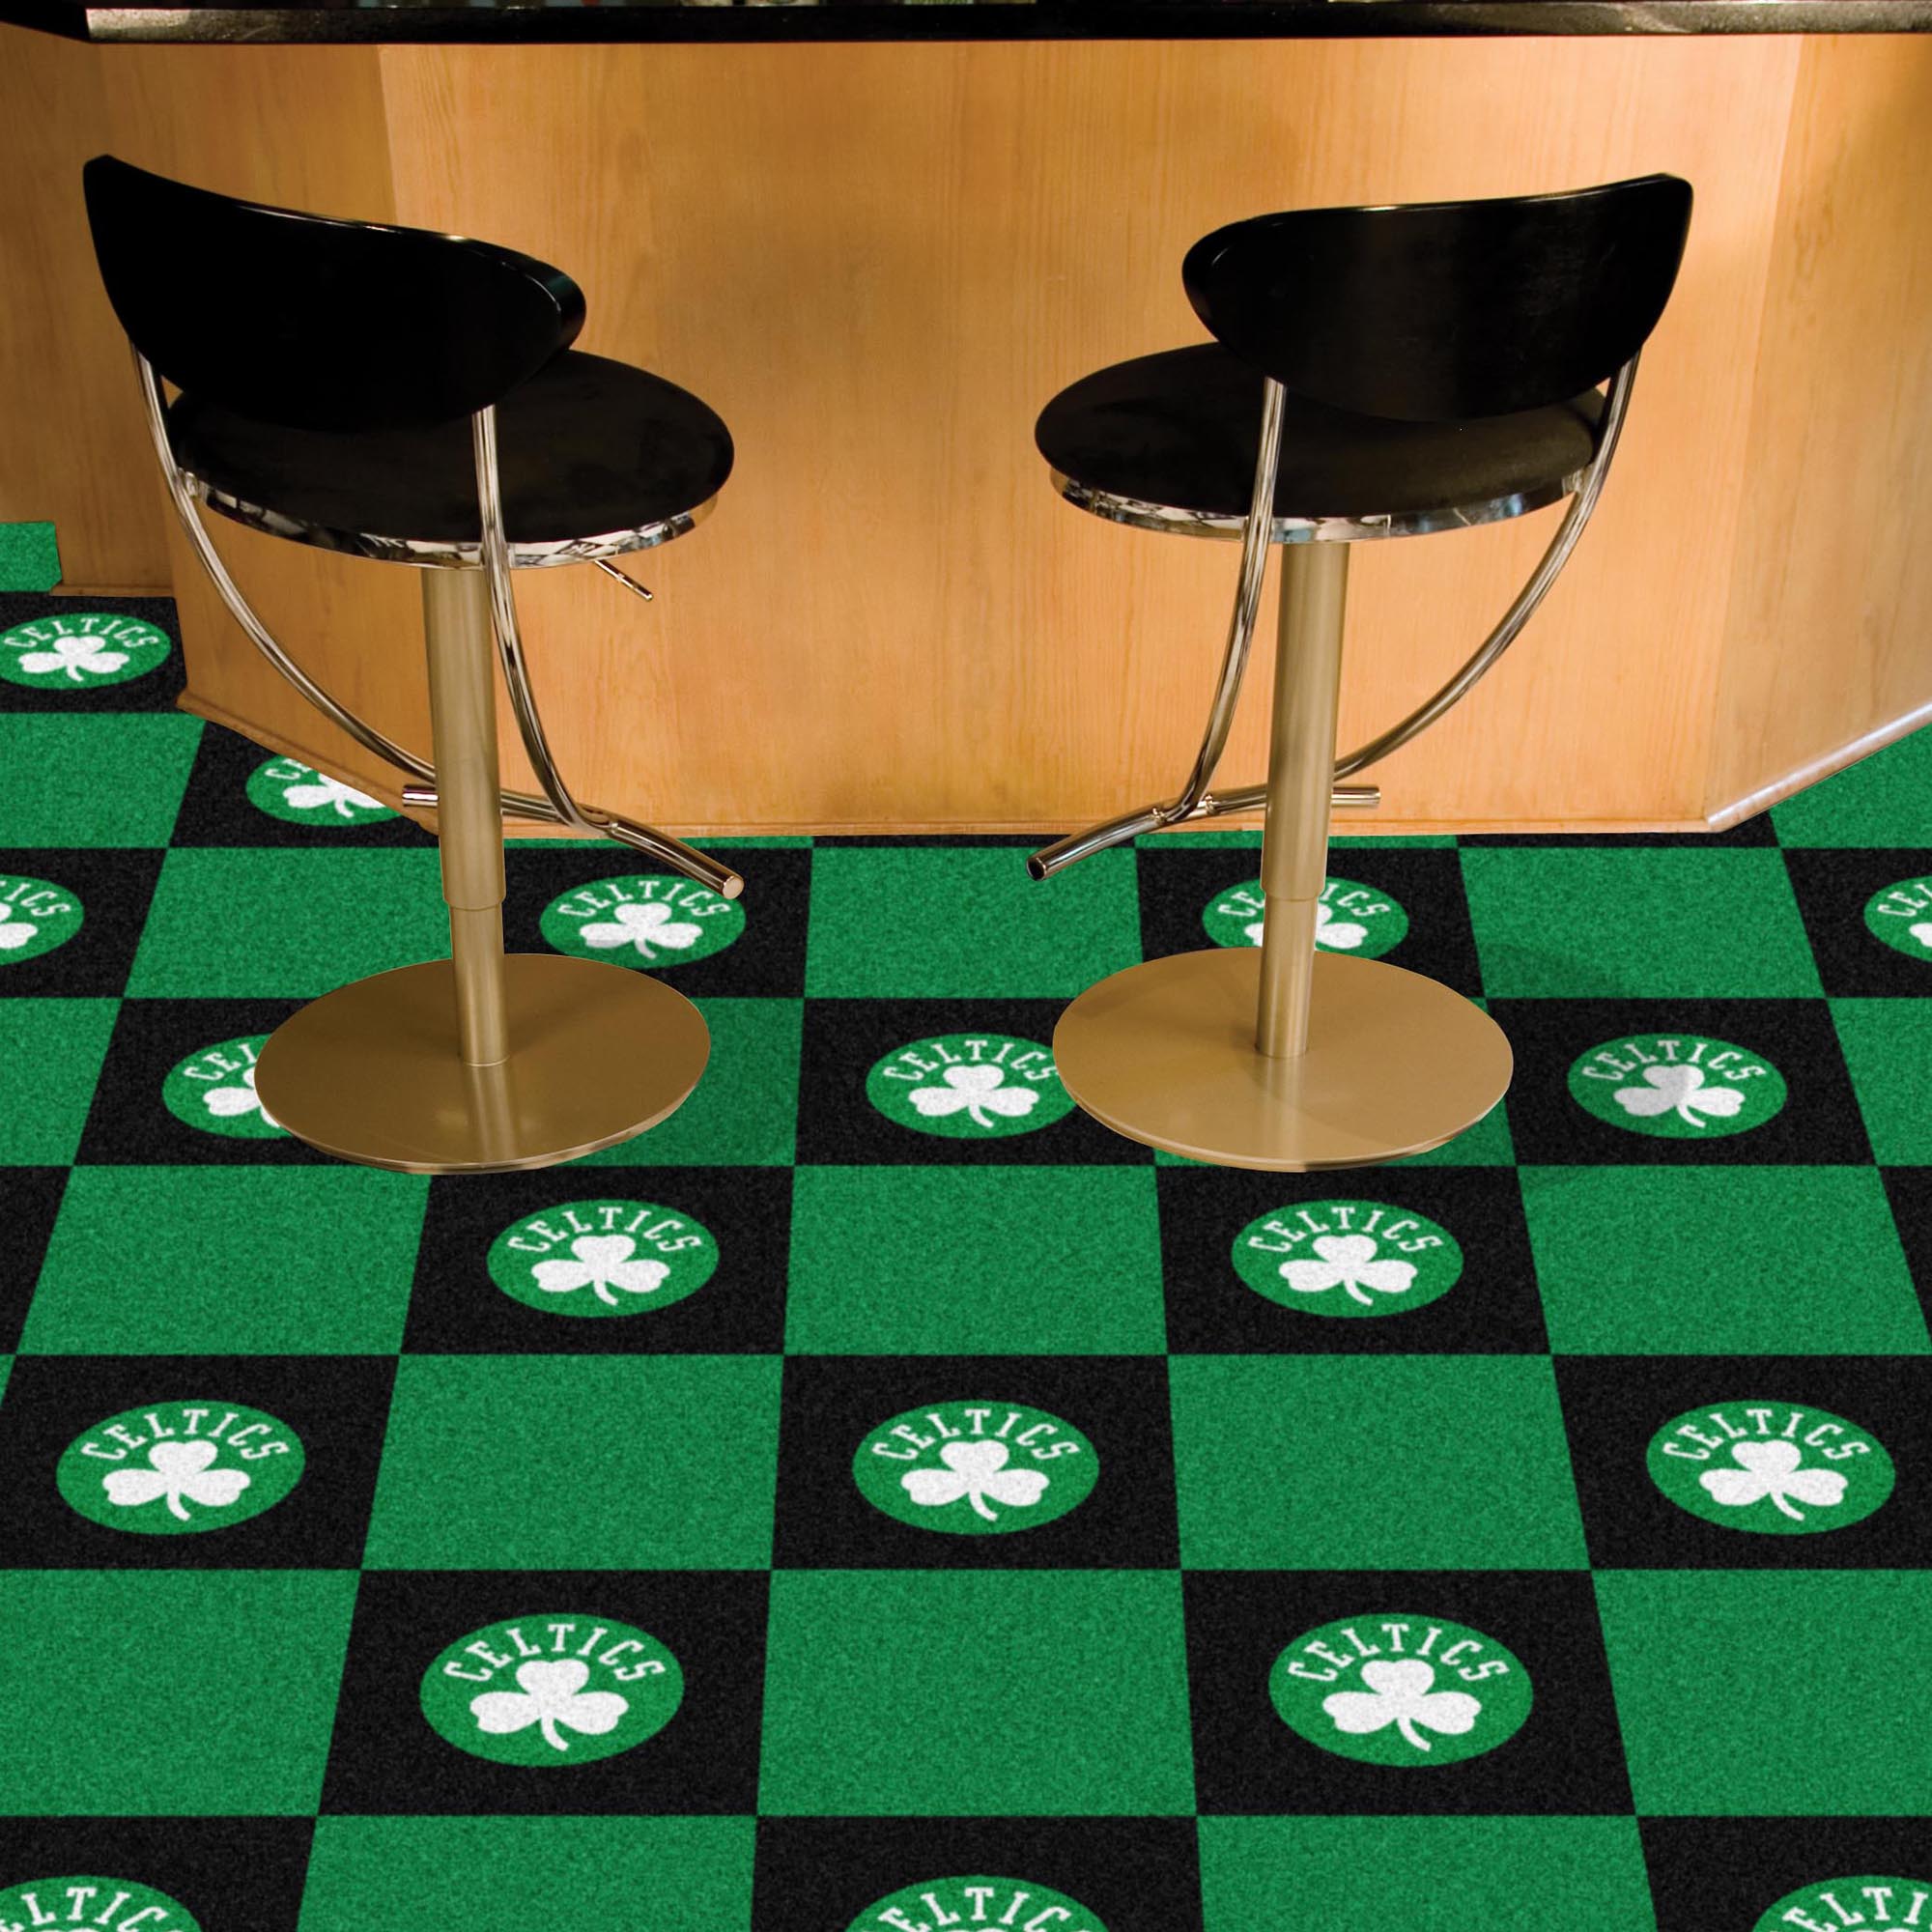 Celtics Team Carpet Tiles - 45 sq ft